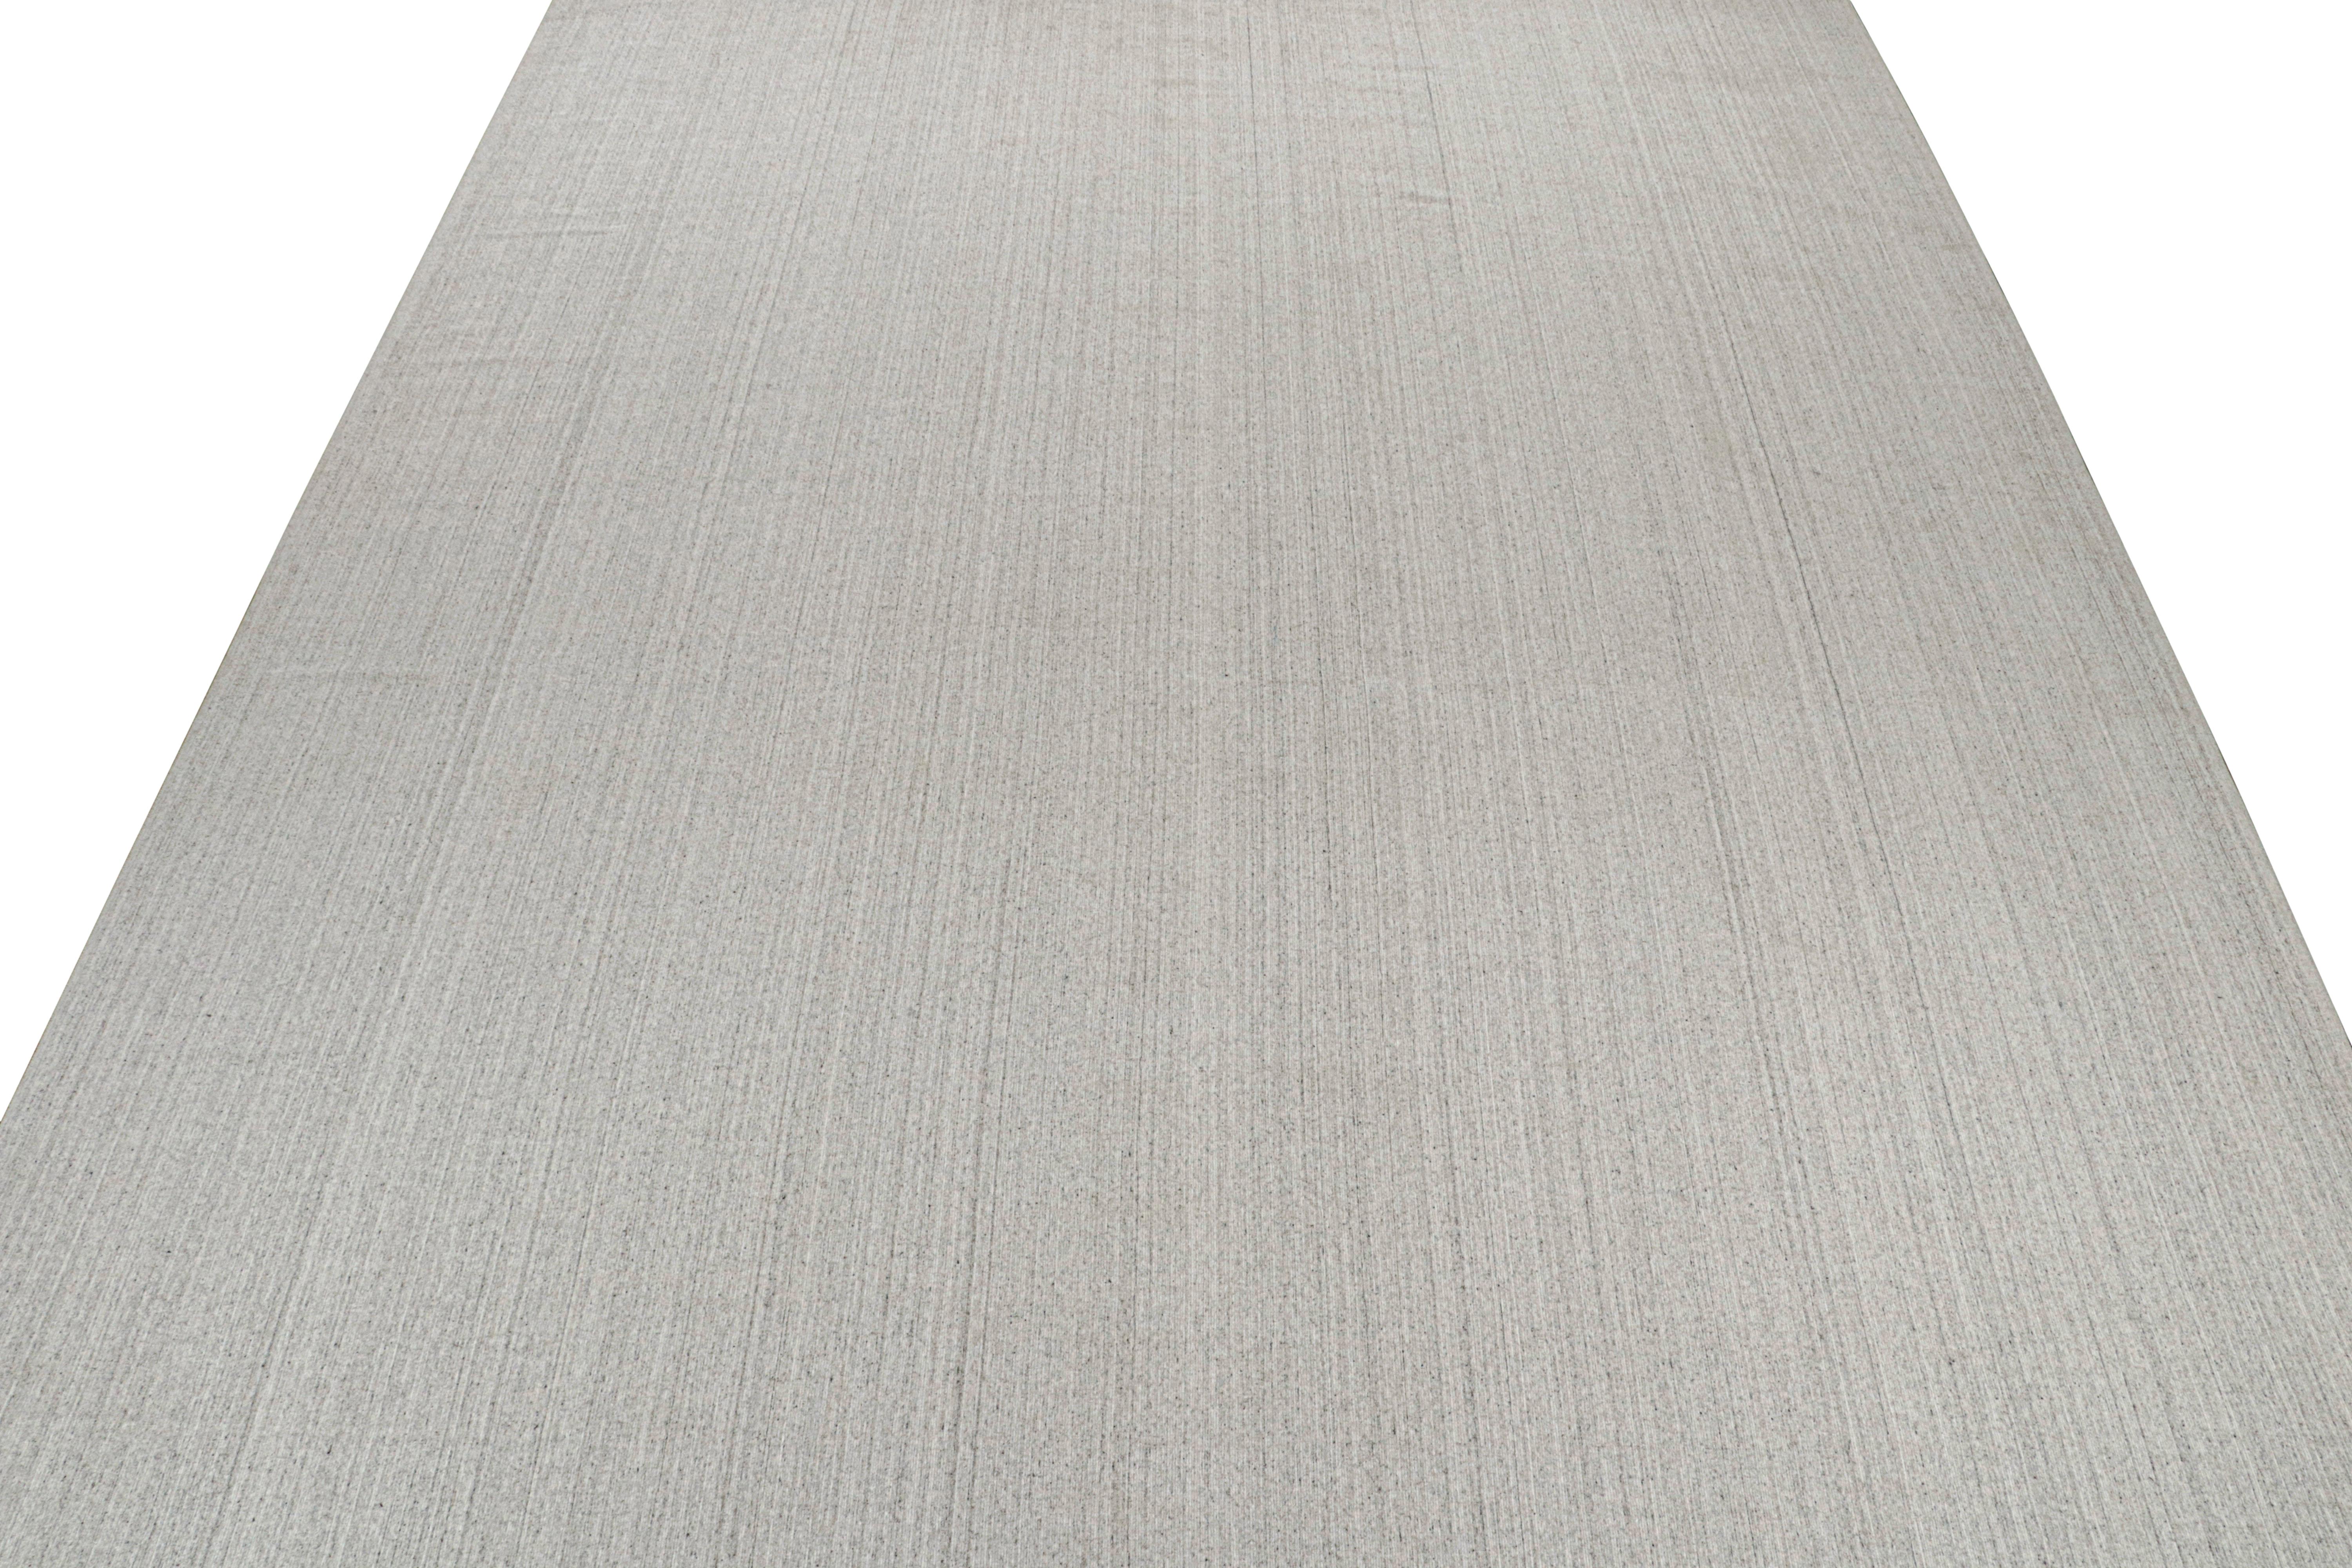 Moderne Rug & Kilim's Modern Rug in Solid Gray and Off-White Striae (tapis moderne en gris uni et rayures blanc cassé) en vente